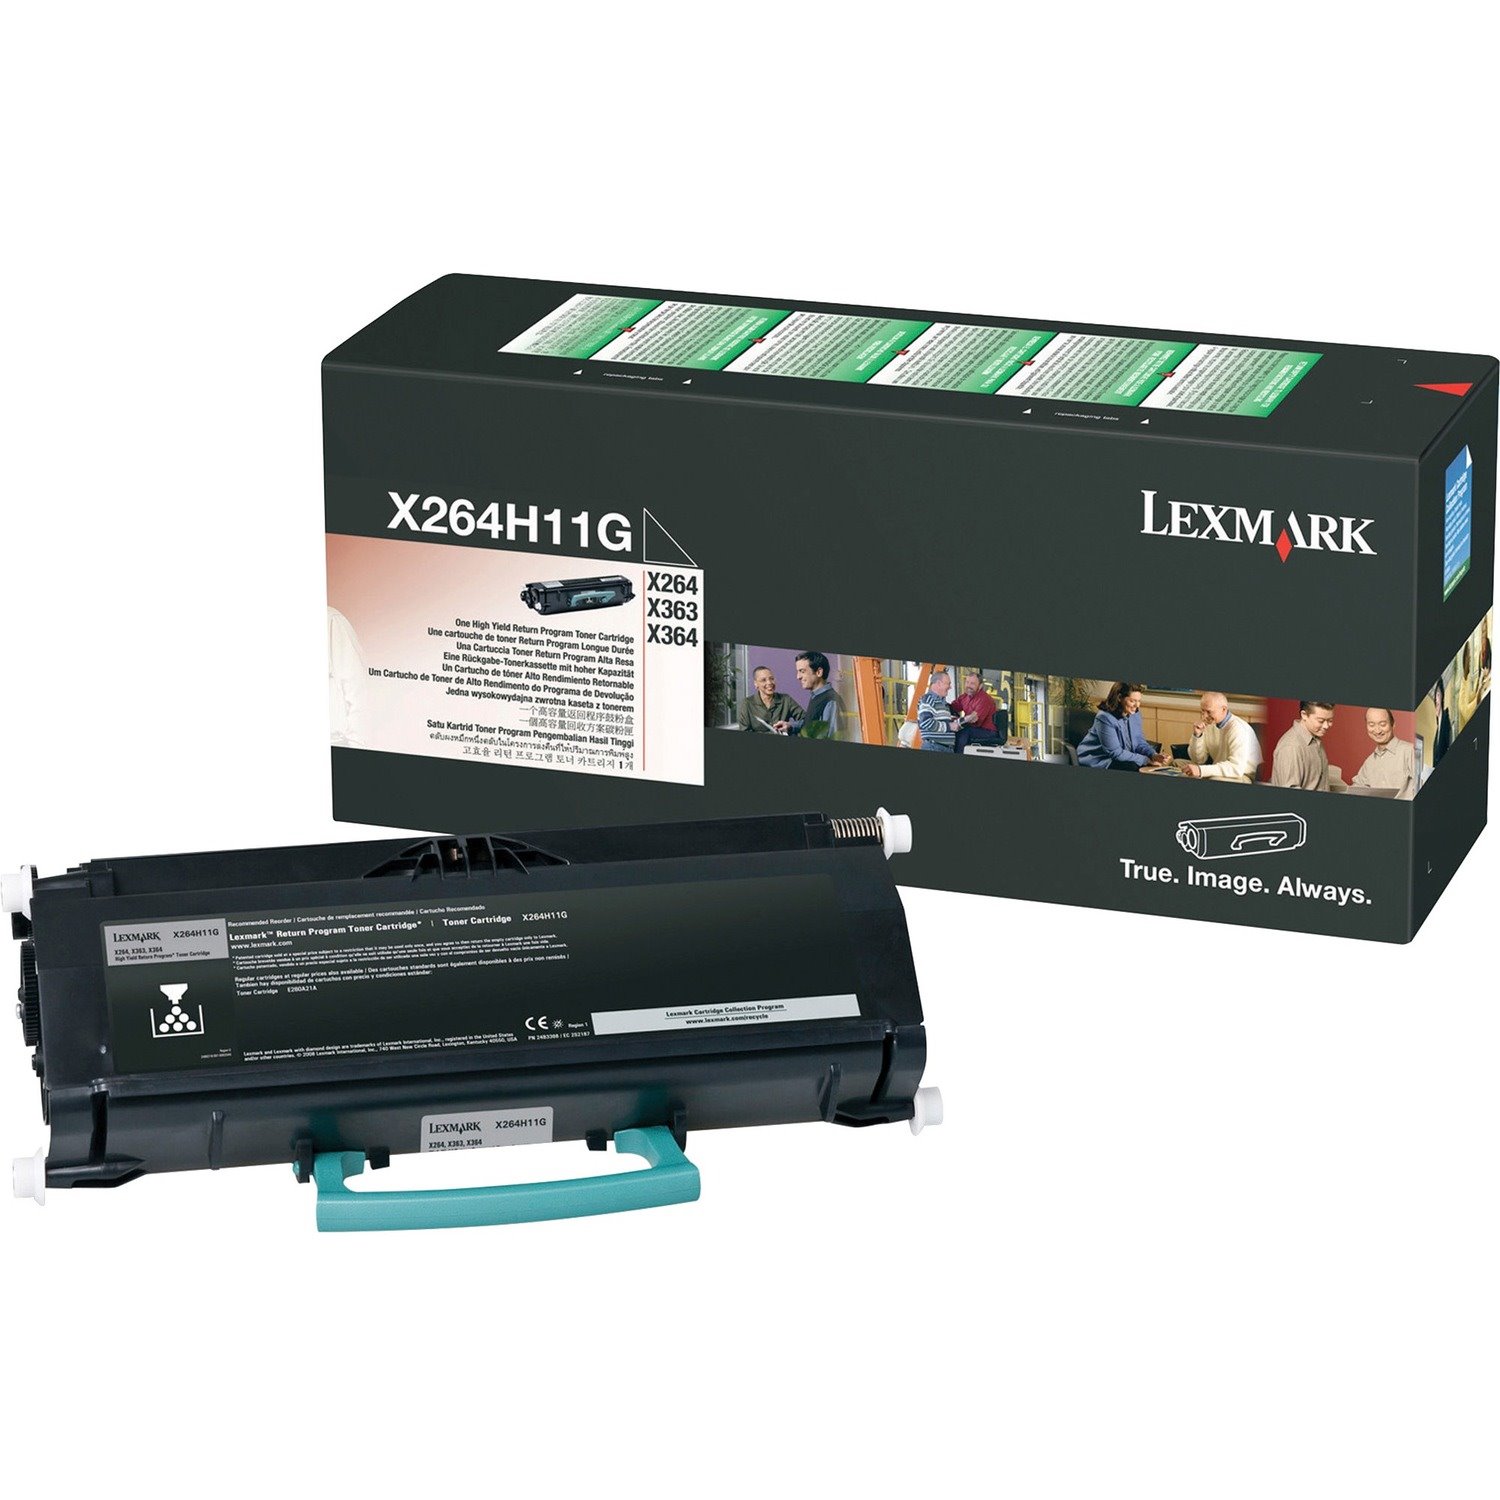 Lexmark X264H11G Original Laser Toner Cartridge - Black Pack